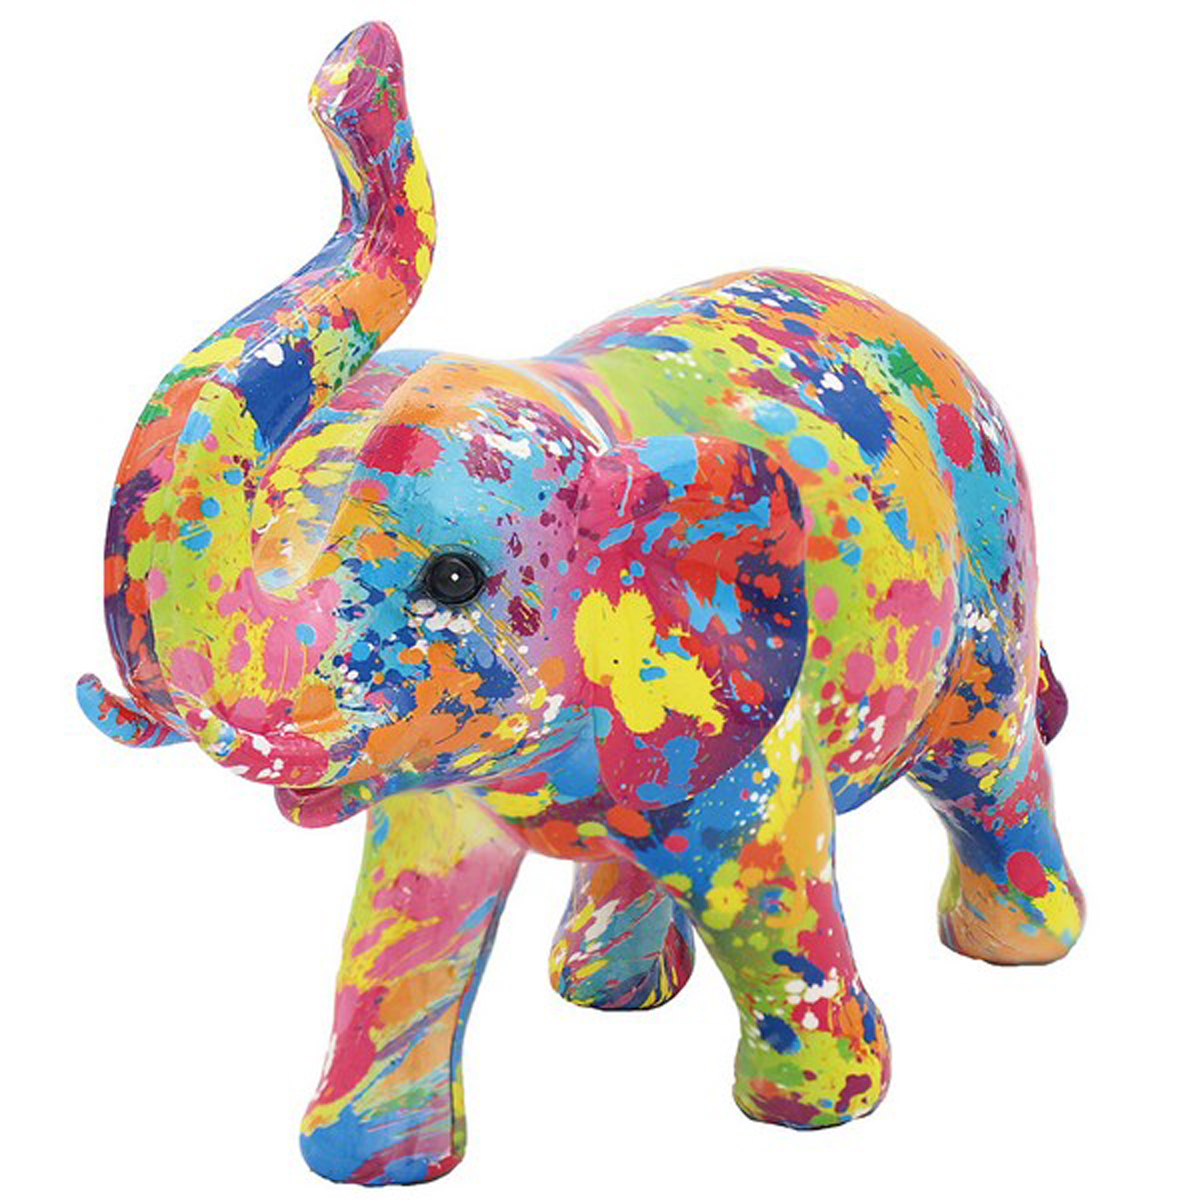 Figurine résine \'Elephant\' splash multicolore - 26x21x9 cm - [A3851]